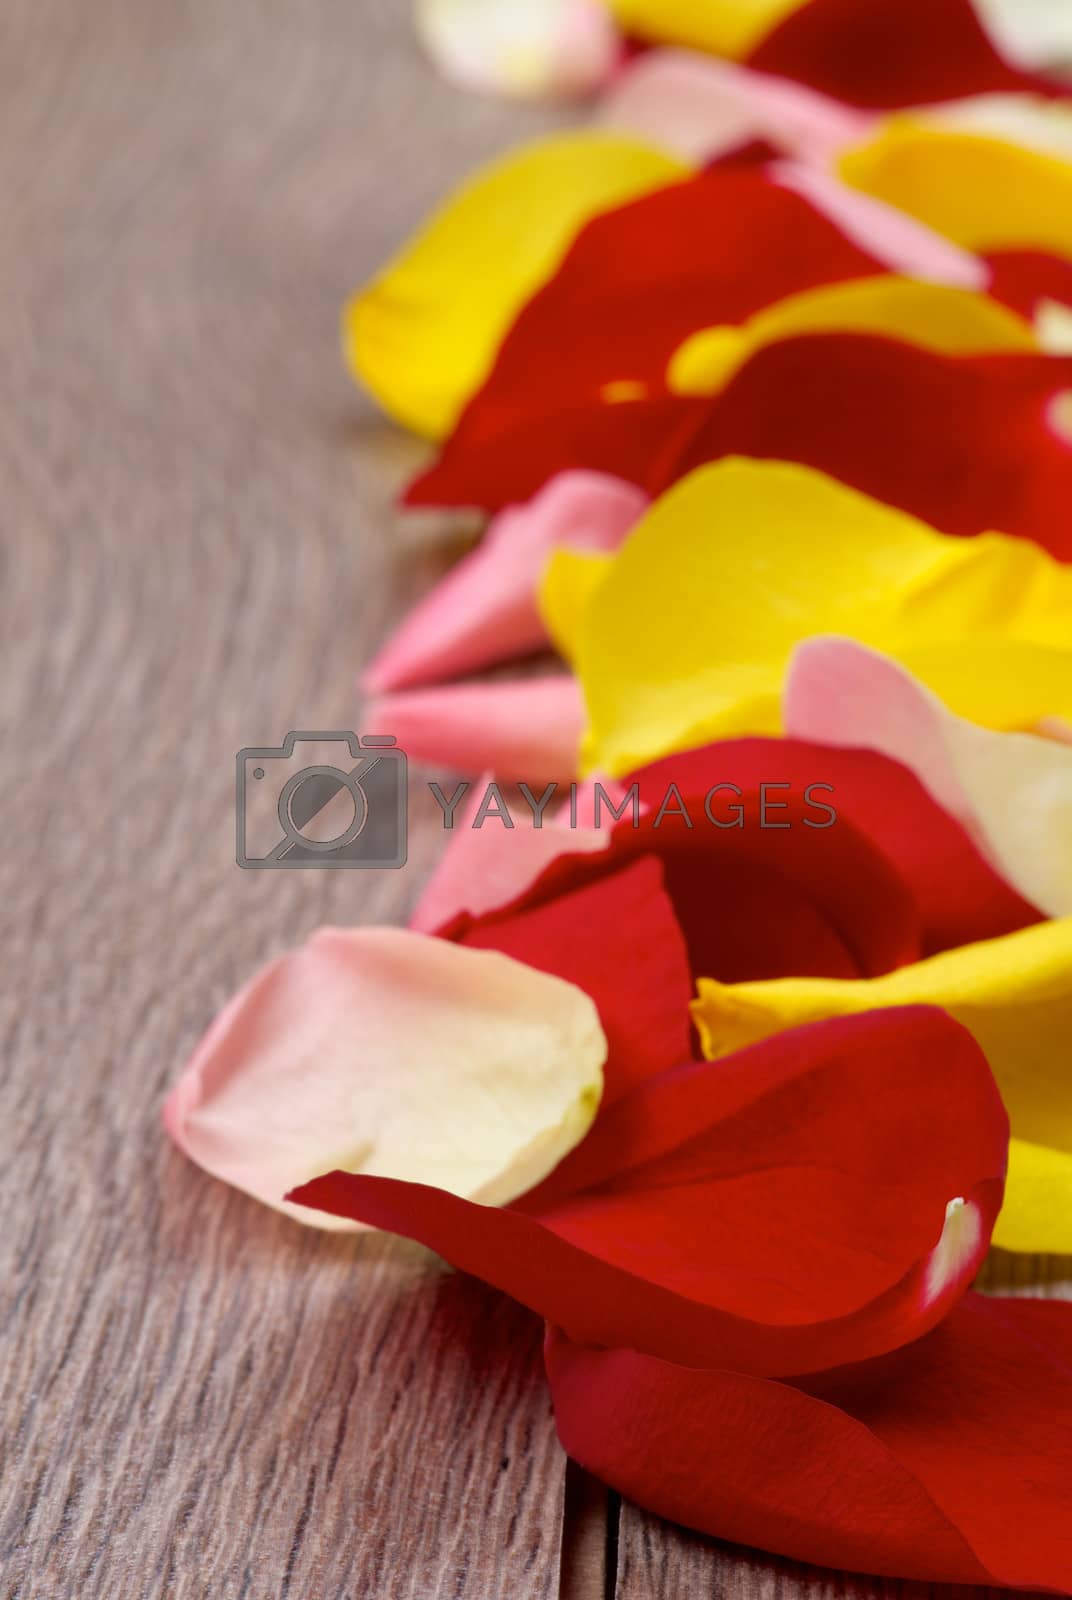 Royalty free image of Rose Petals by zhekos